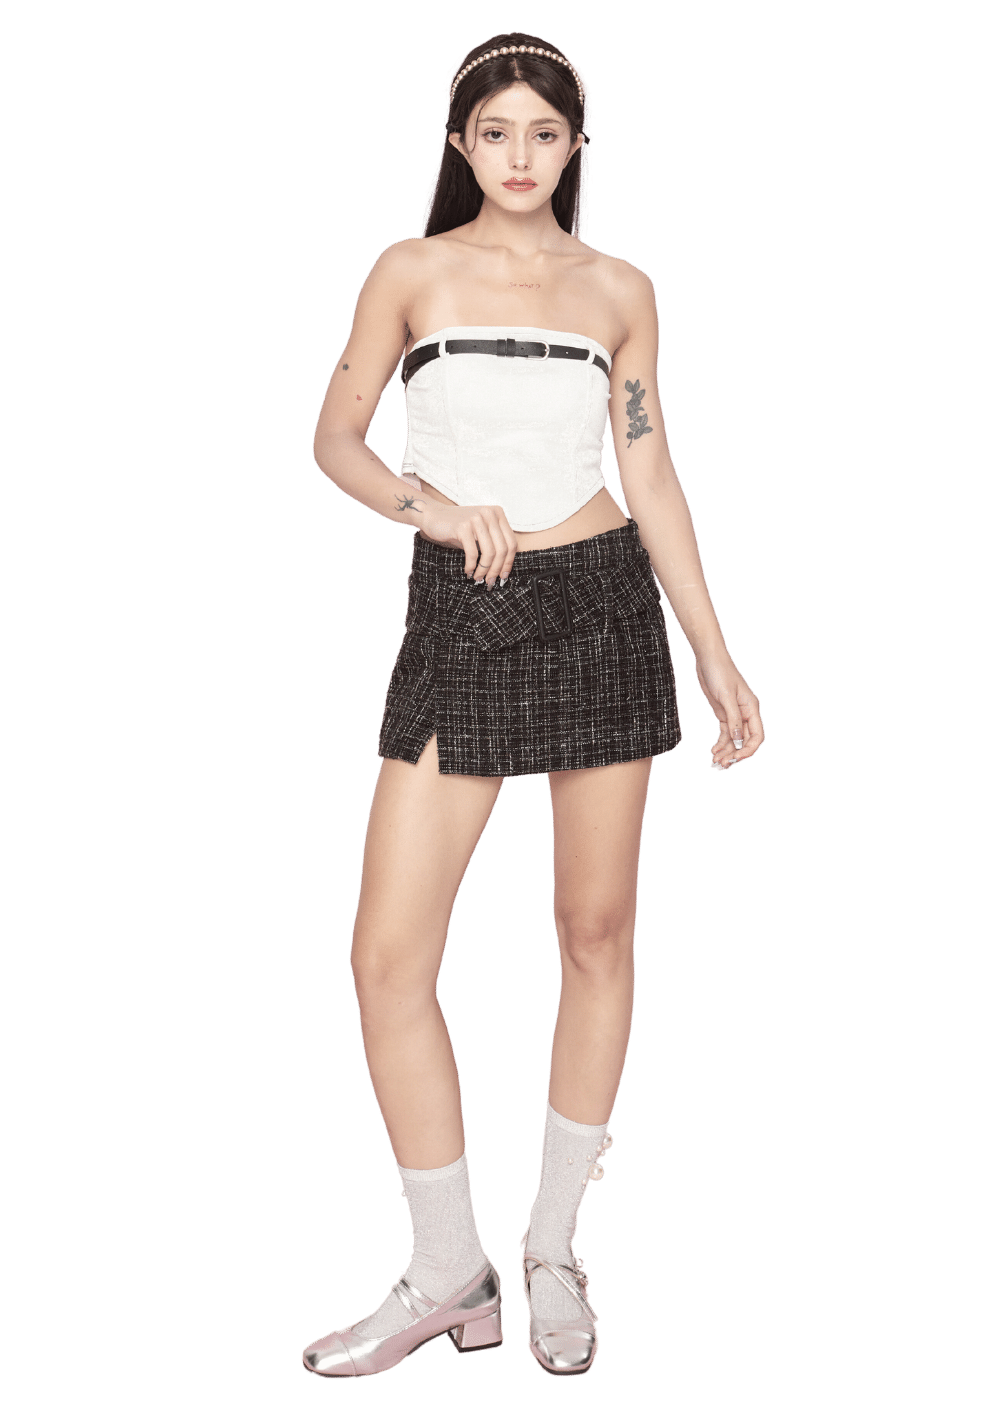 Chanel Inspired Mini Skirt - PSYLOS 1, Chanel Inspired Mini Skirt, skirt, LHC MODA, PSYLOS 1